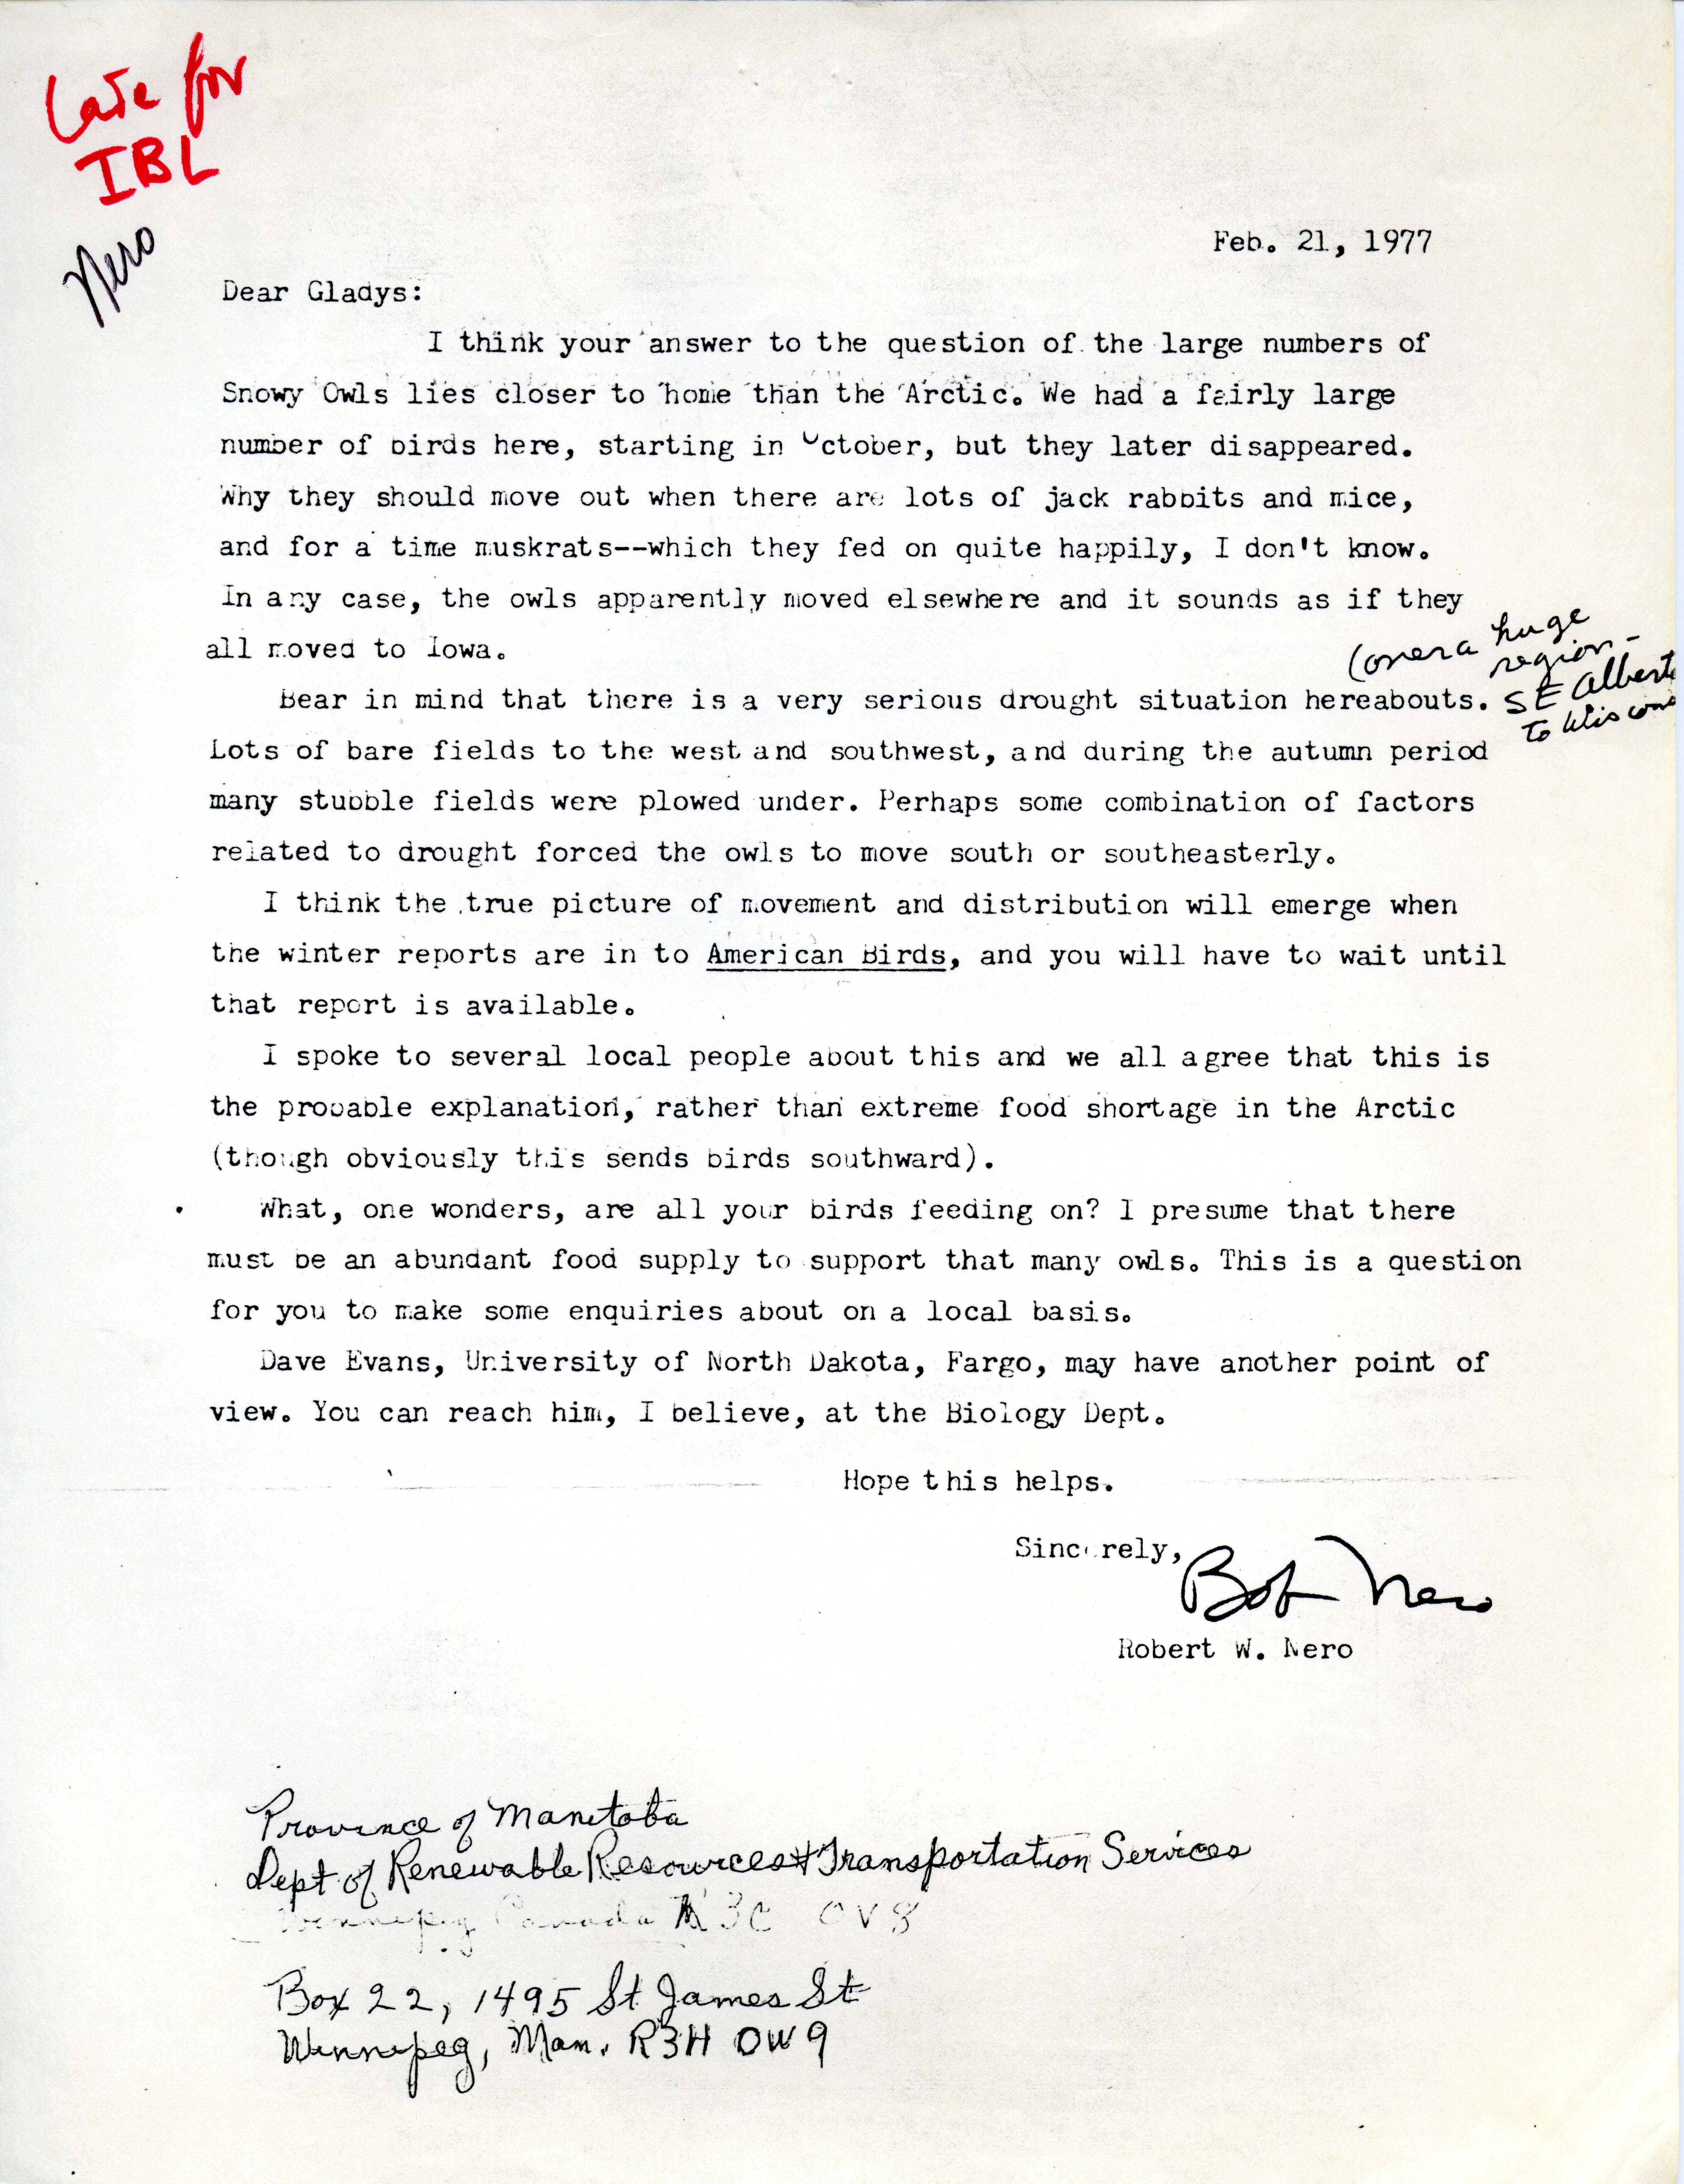 Robert W. Nero letter to Gladys Black regarding Snowy Owl migration, February 21, 1977